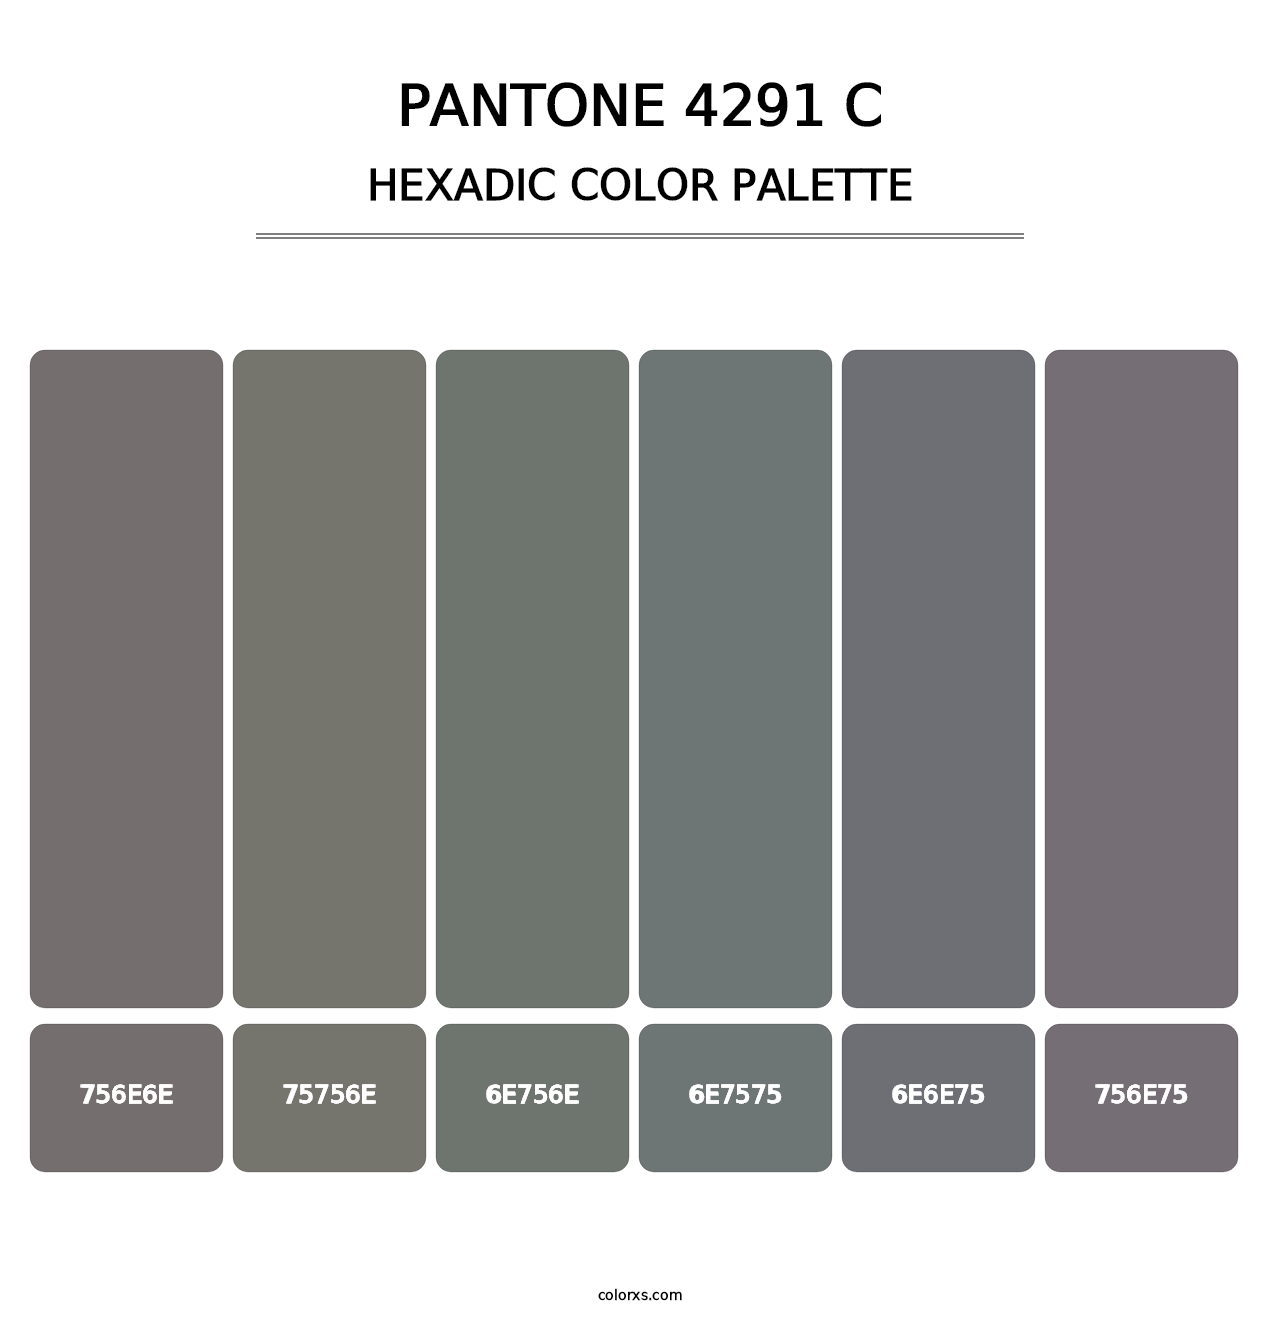 PANTONE 4291 C - Hexadic Color Palette